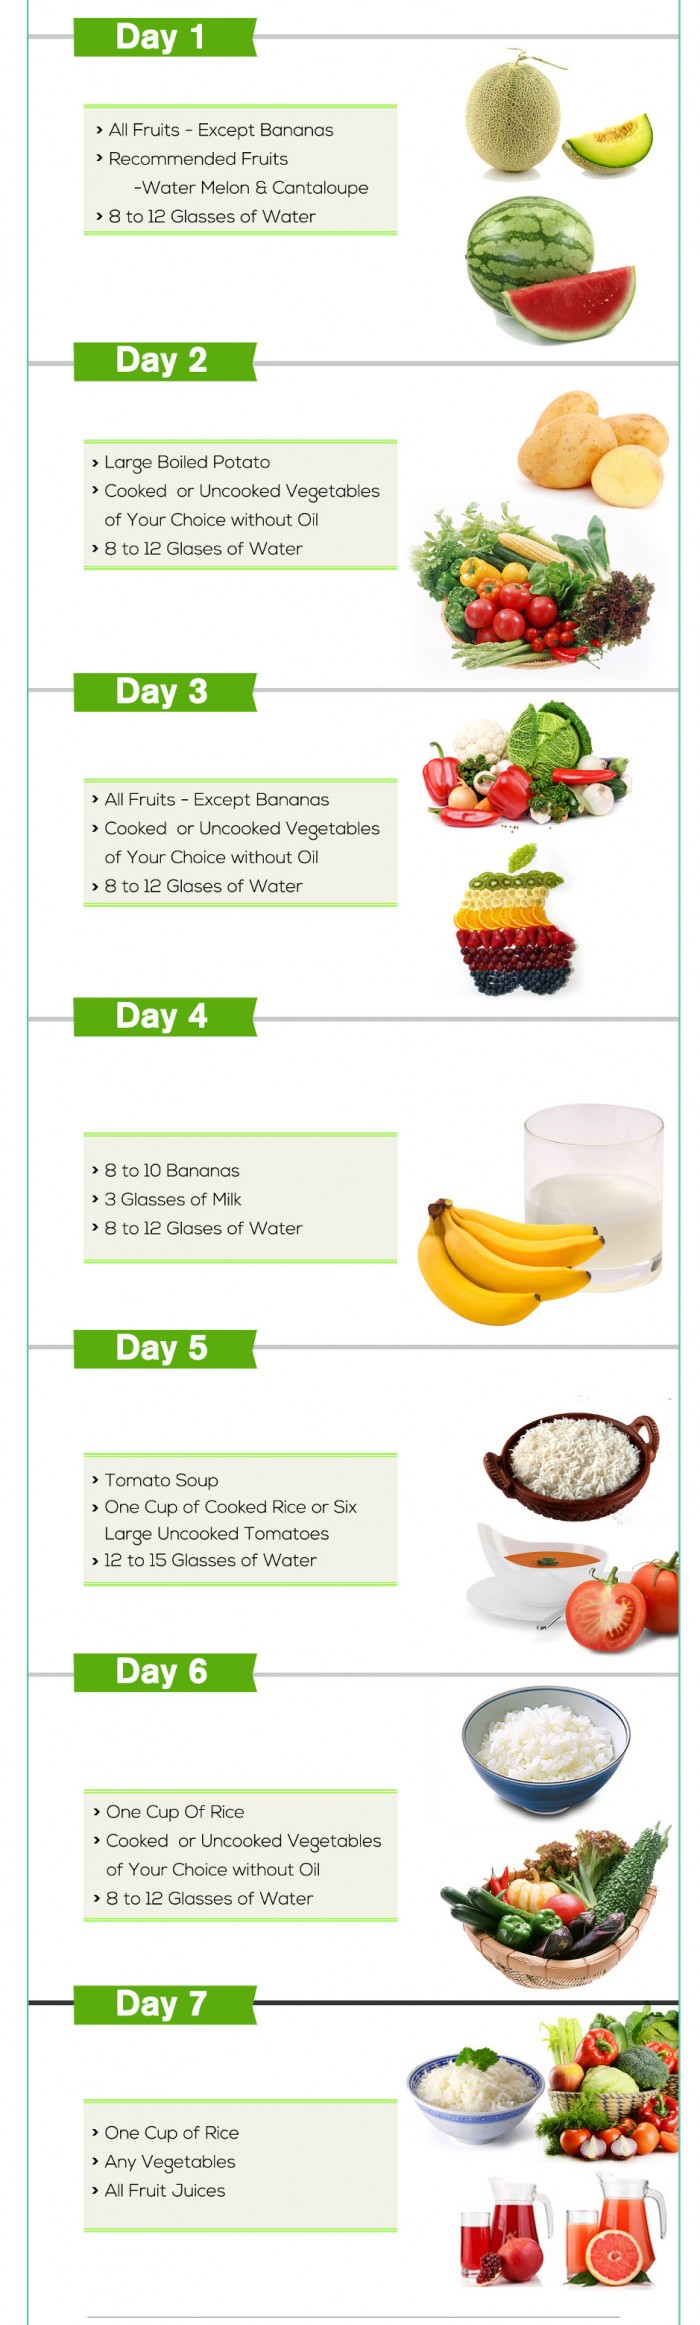 7 Day Vegetarian Diet Plan - Indoindians.com